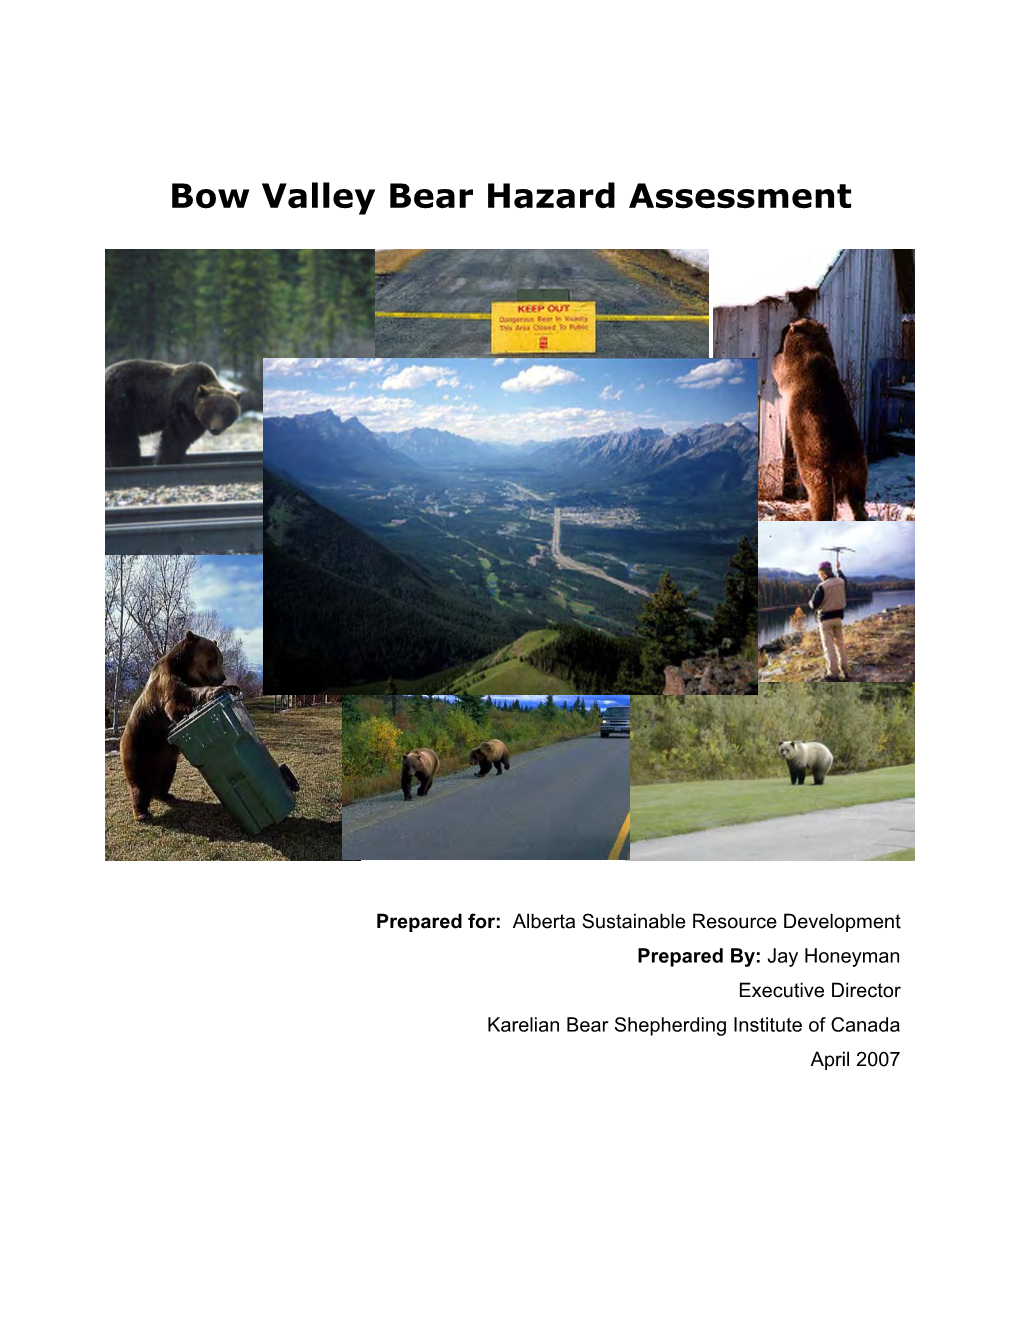 Honeyman, J. 2007. Bow Valley Bear Hazard Assessment